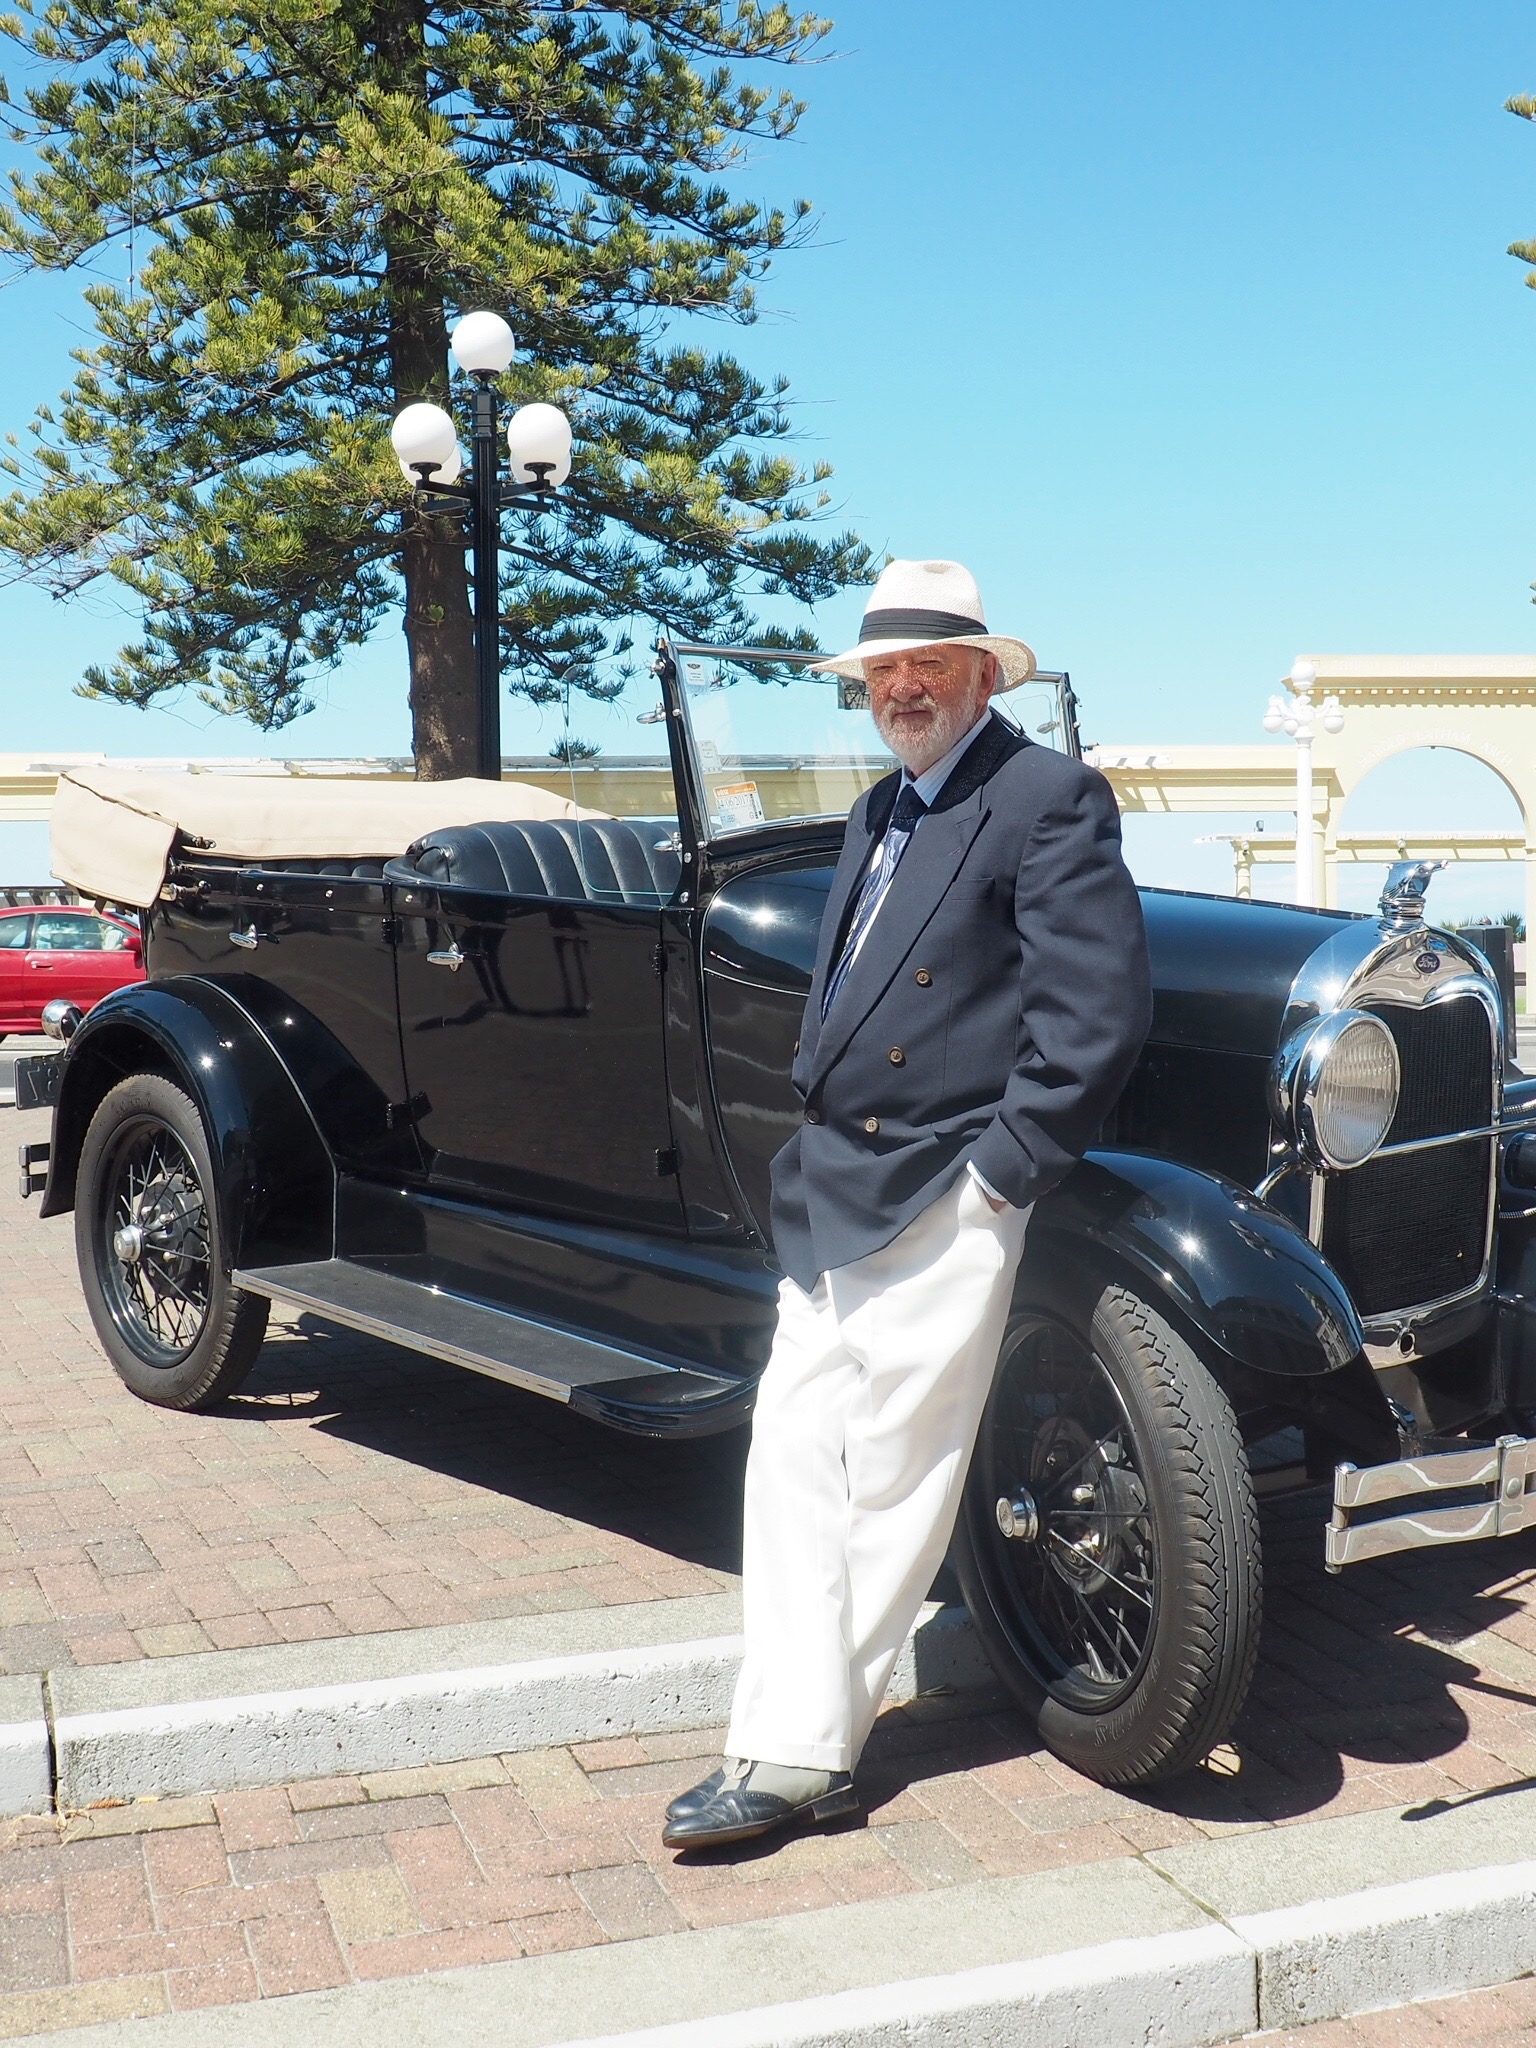 Leigh Patterson & his vintage car. Napier. New Zealand.